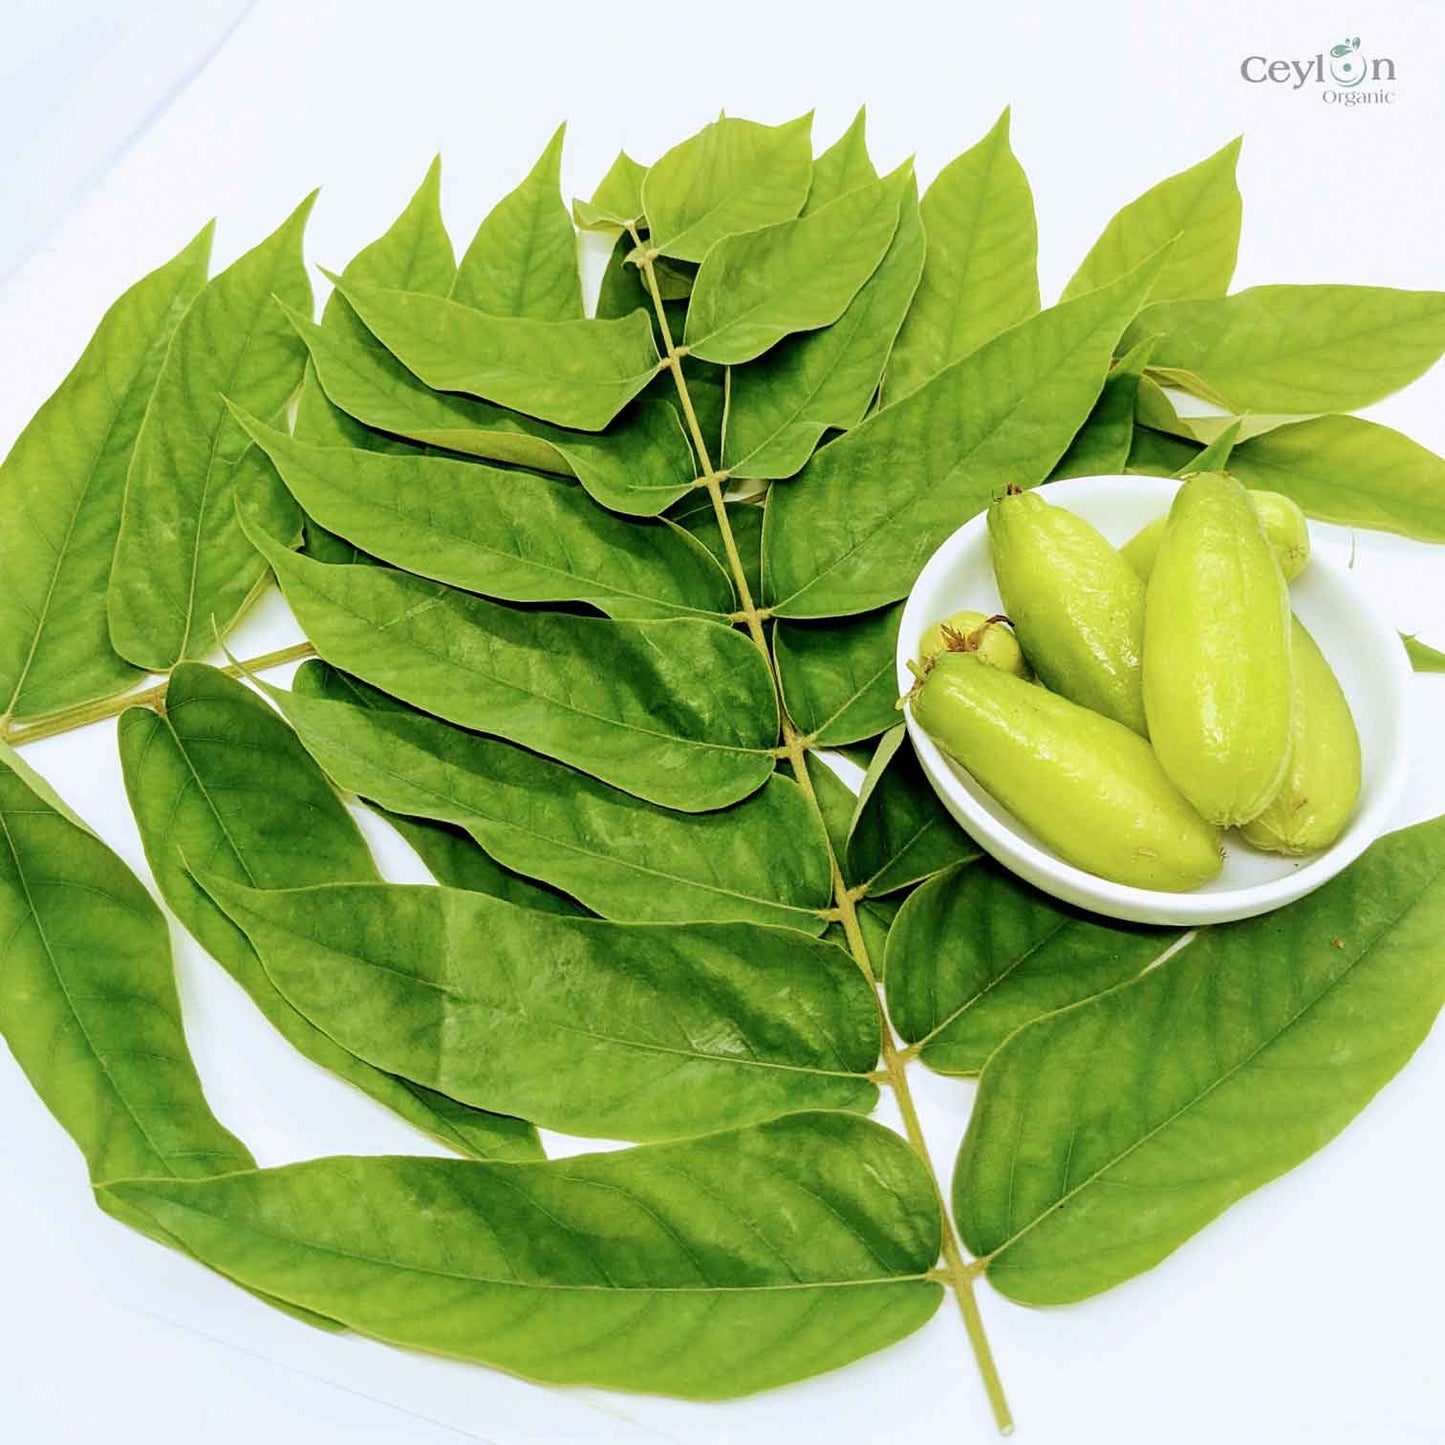 500+ Dried  Averrhoa Bilimbi Leaves, kamias leaves | ceylon organic-5